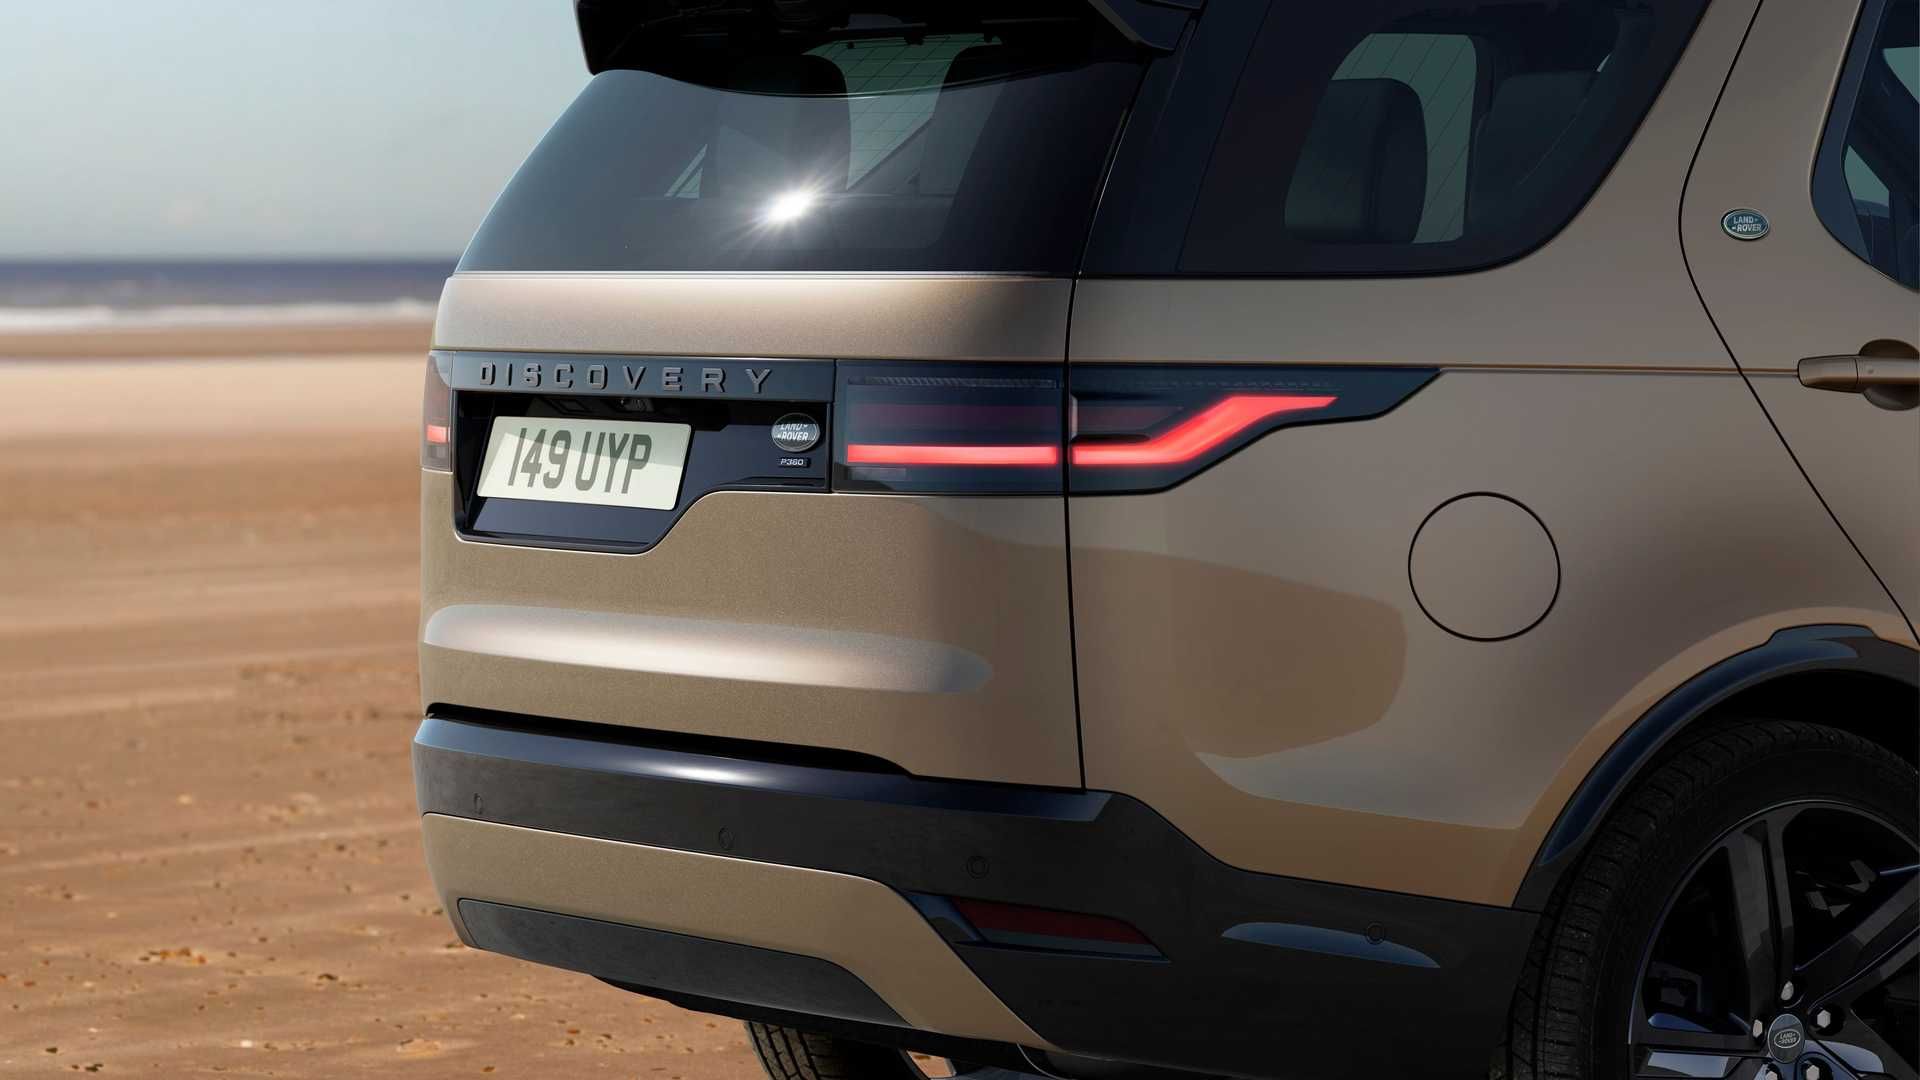 Land Rover Discovery  2021 لندرور دیسکاوری 